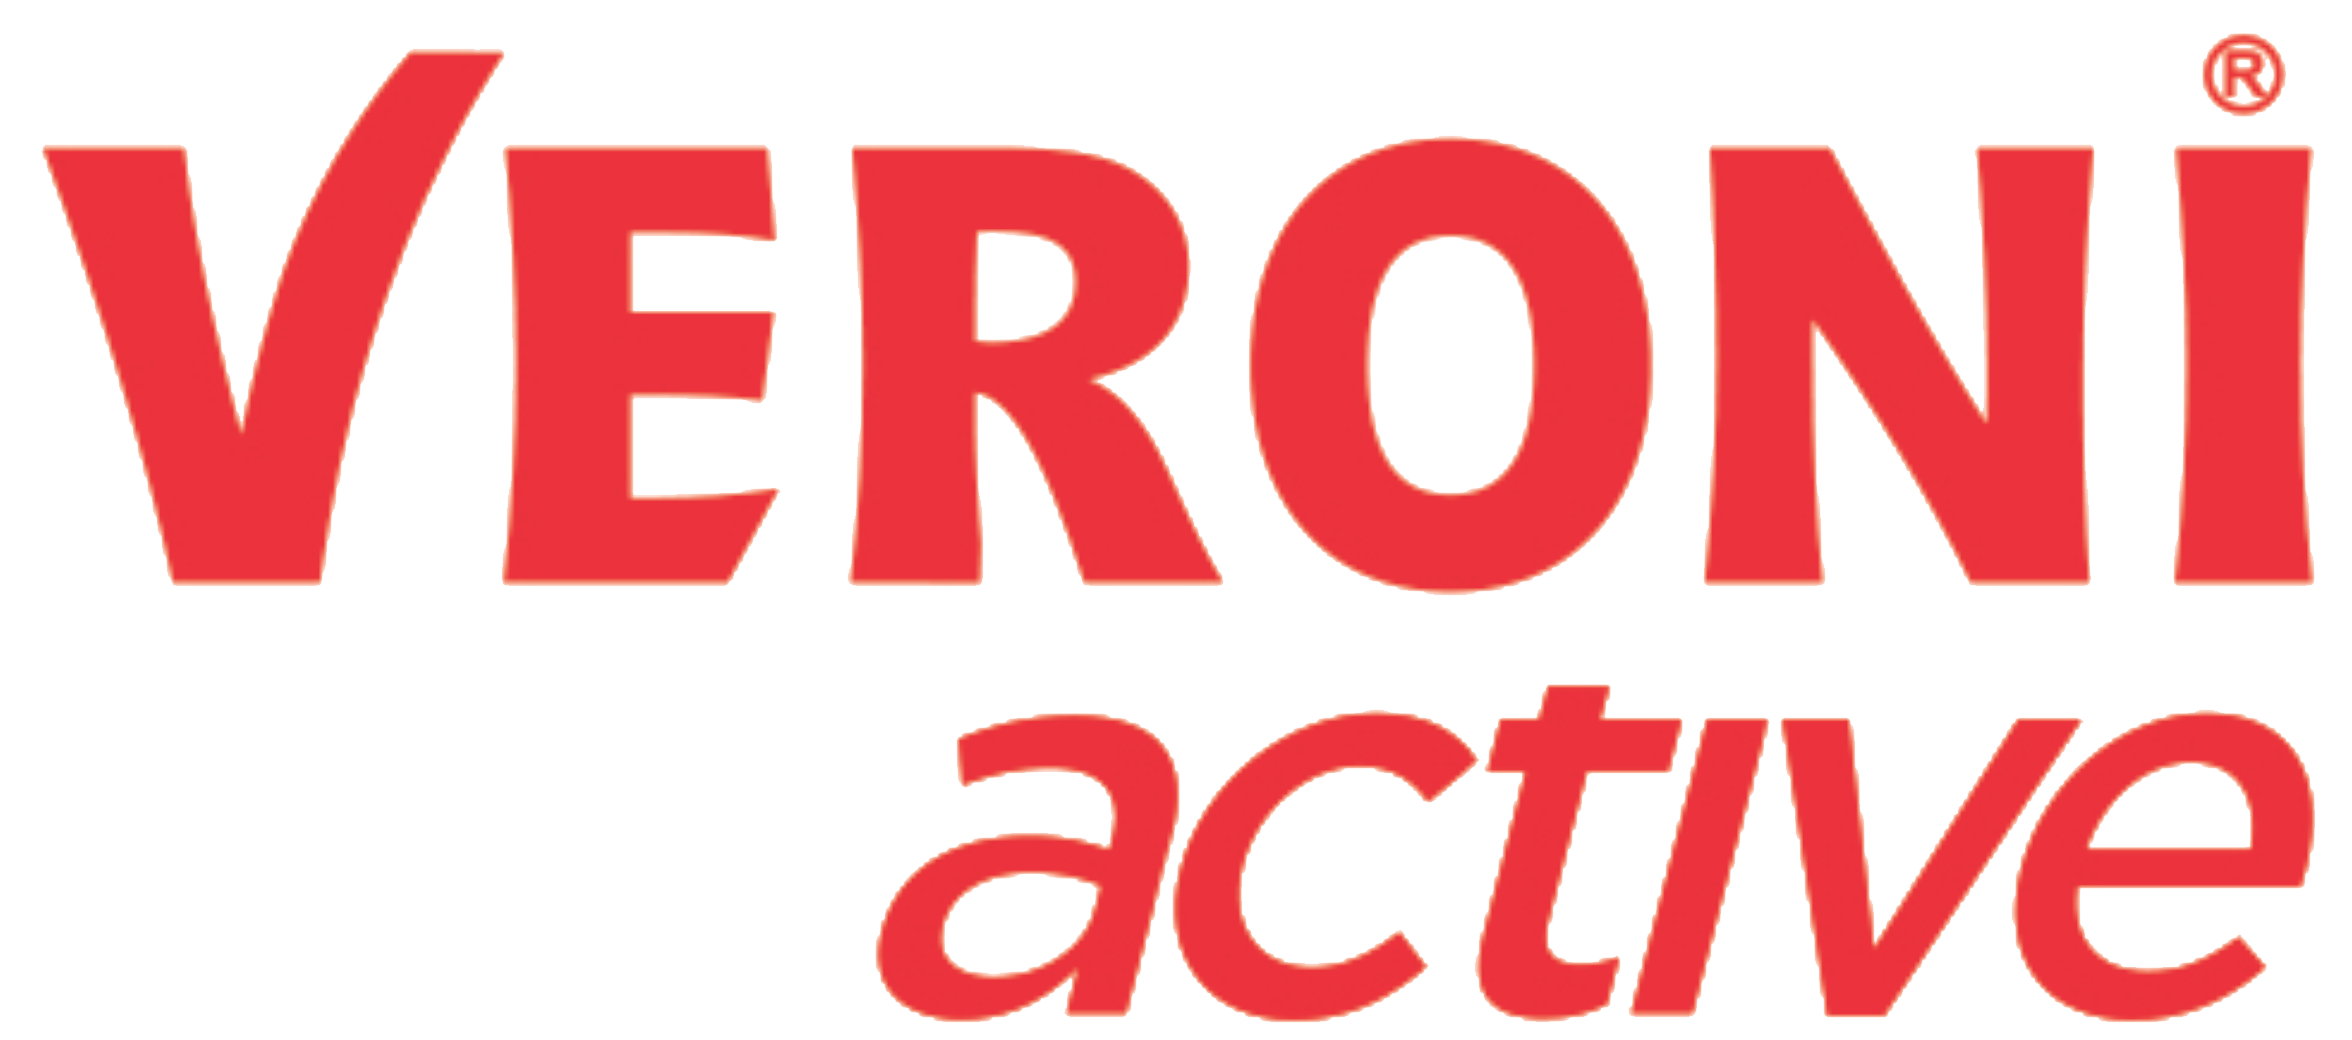 movie_logo